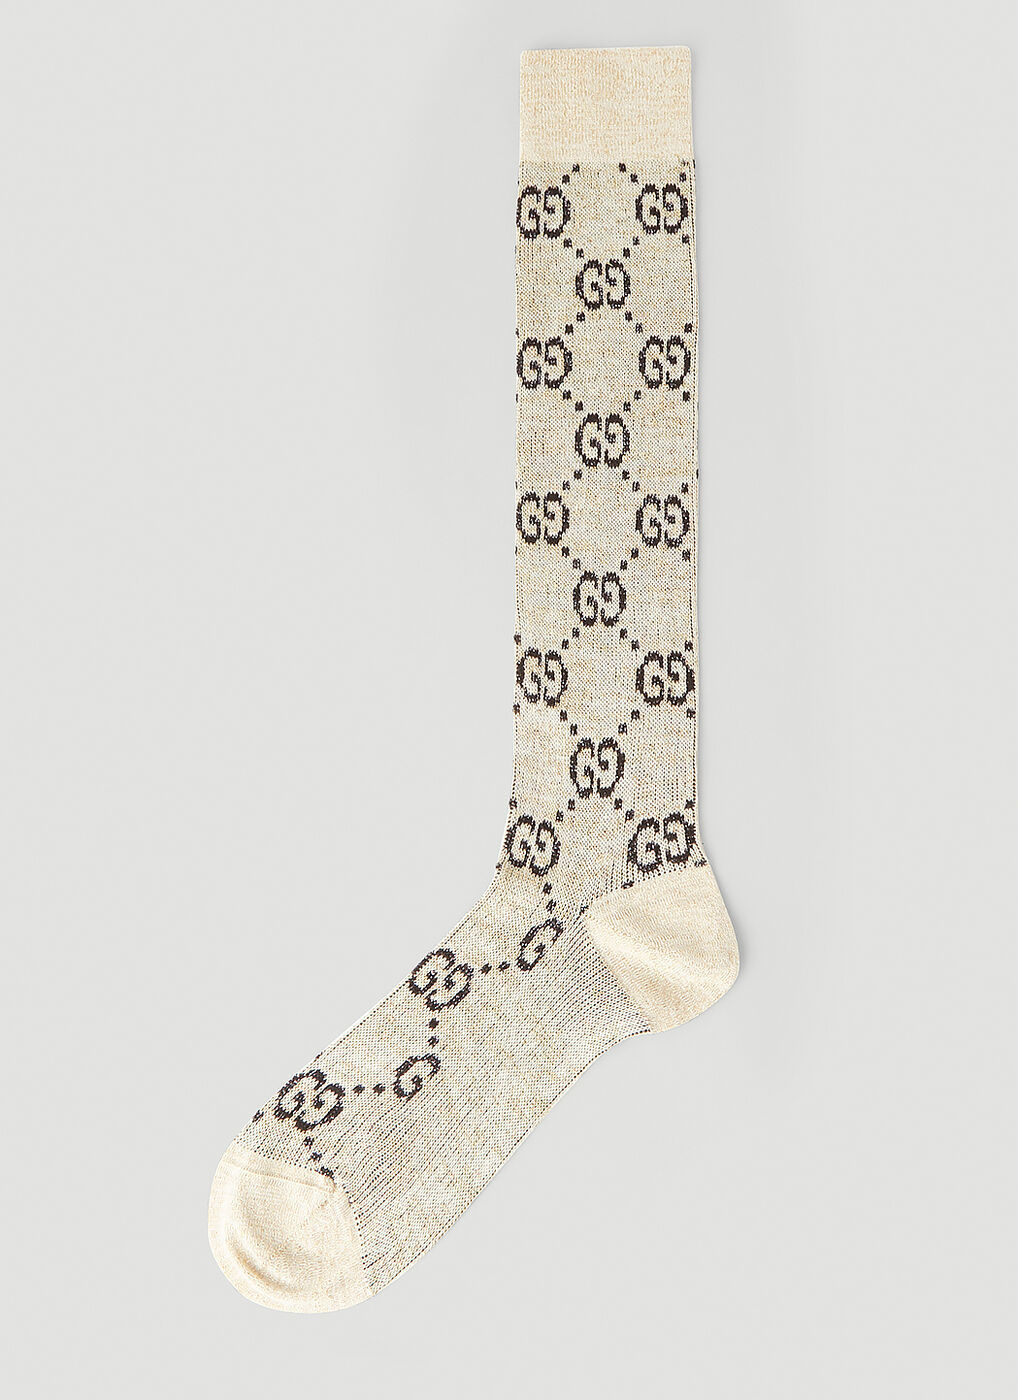 Lamé GG Socks in White Gucci